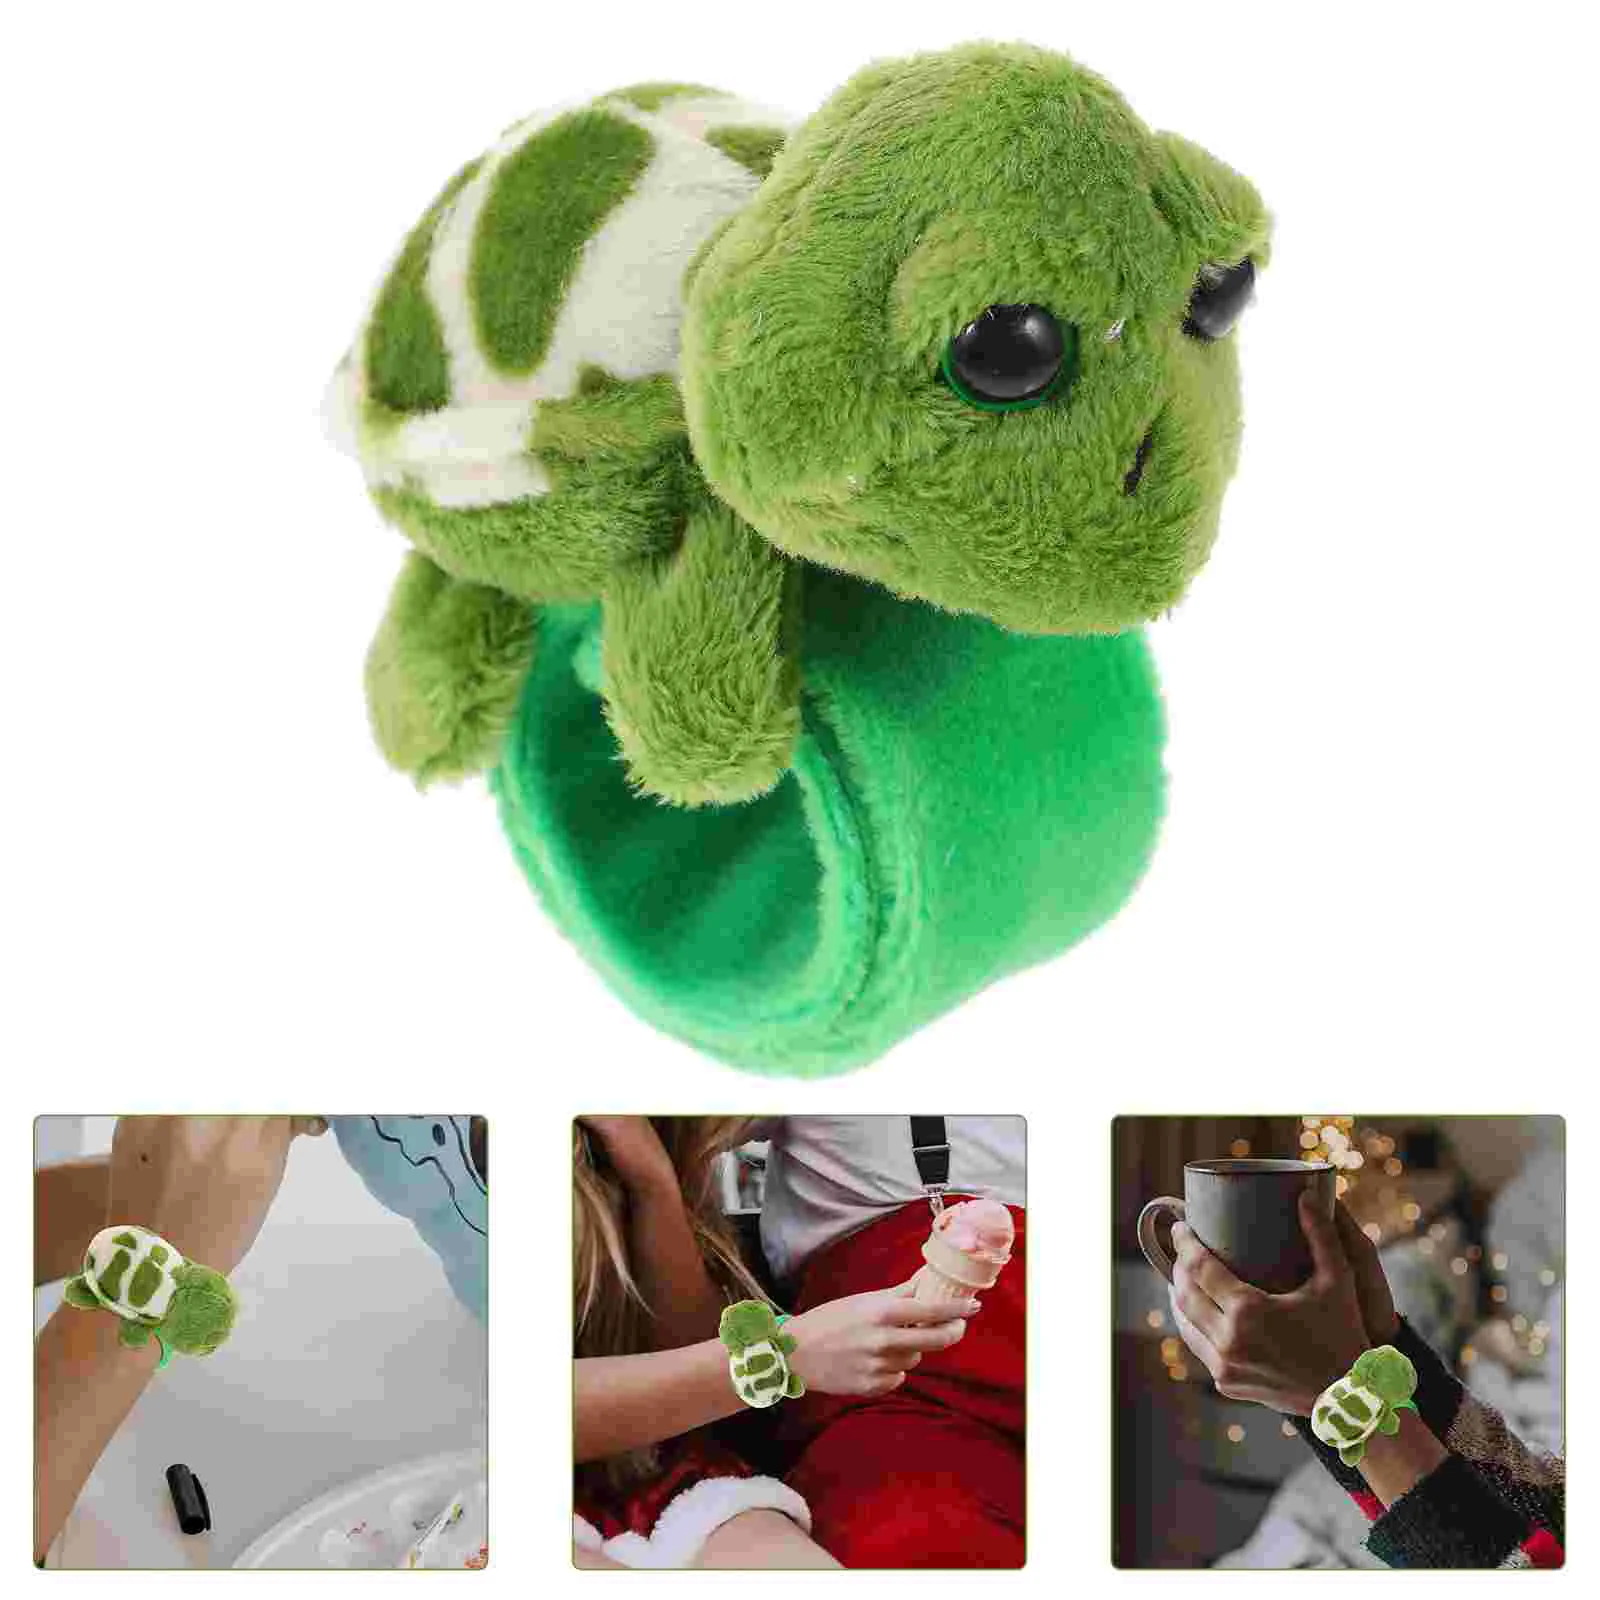 

2 Pcs Wrist Bands Animal Slap Bracelets Stuffed Hugger Wristband Party Favors Plush Turtle Decorative Child Wristbands